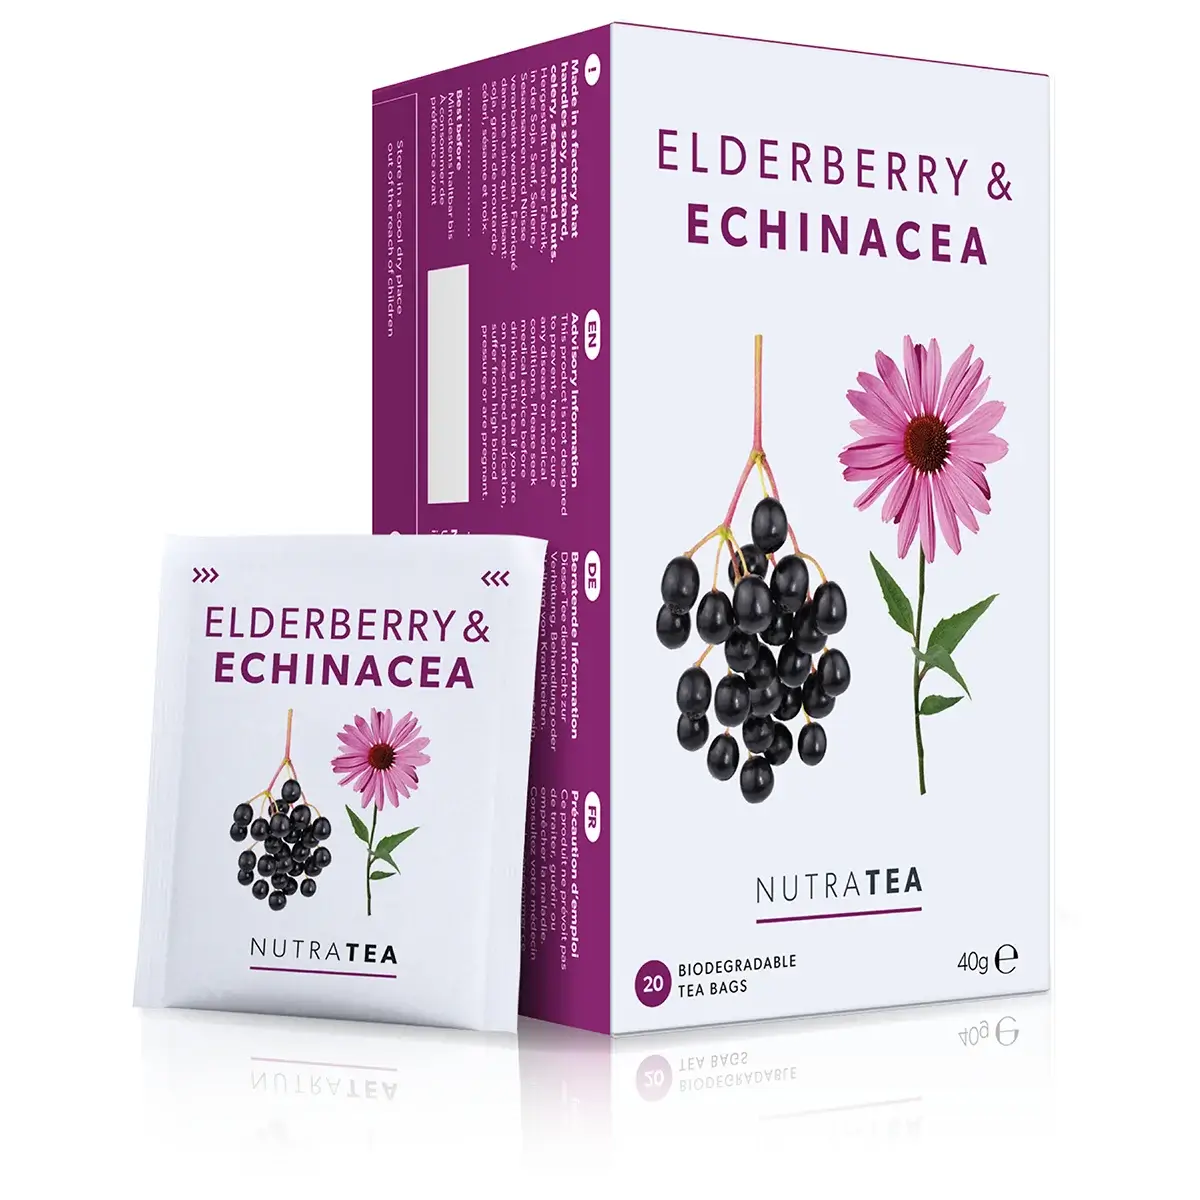 Elderberry & Echinacea Tea - Herbal Tea - 20 Biodegradable Tea Bags